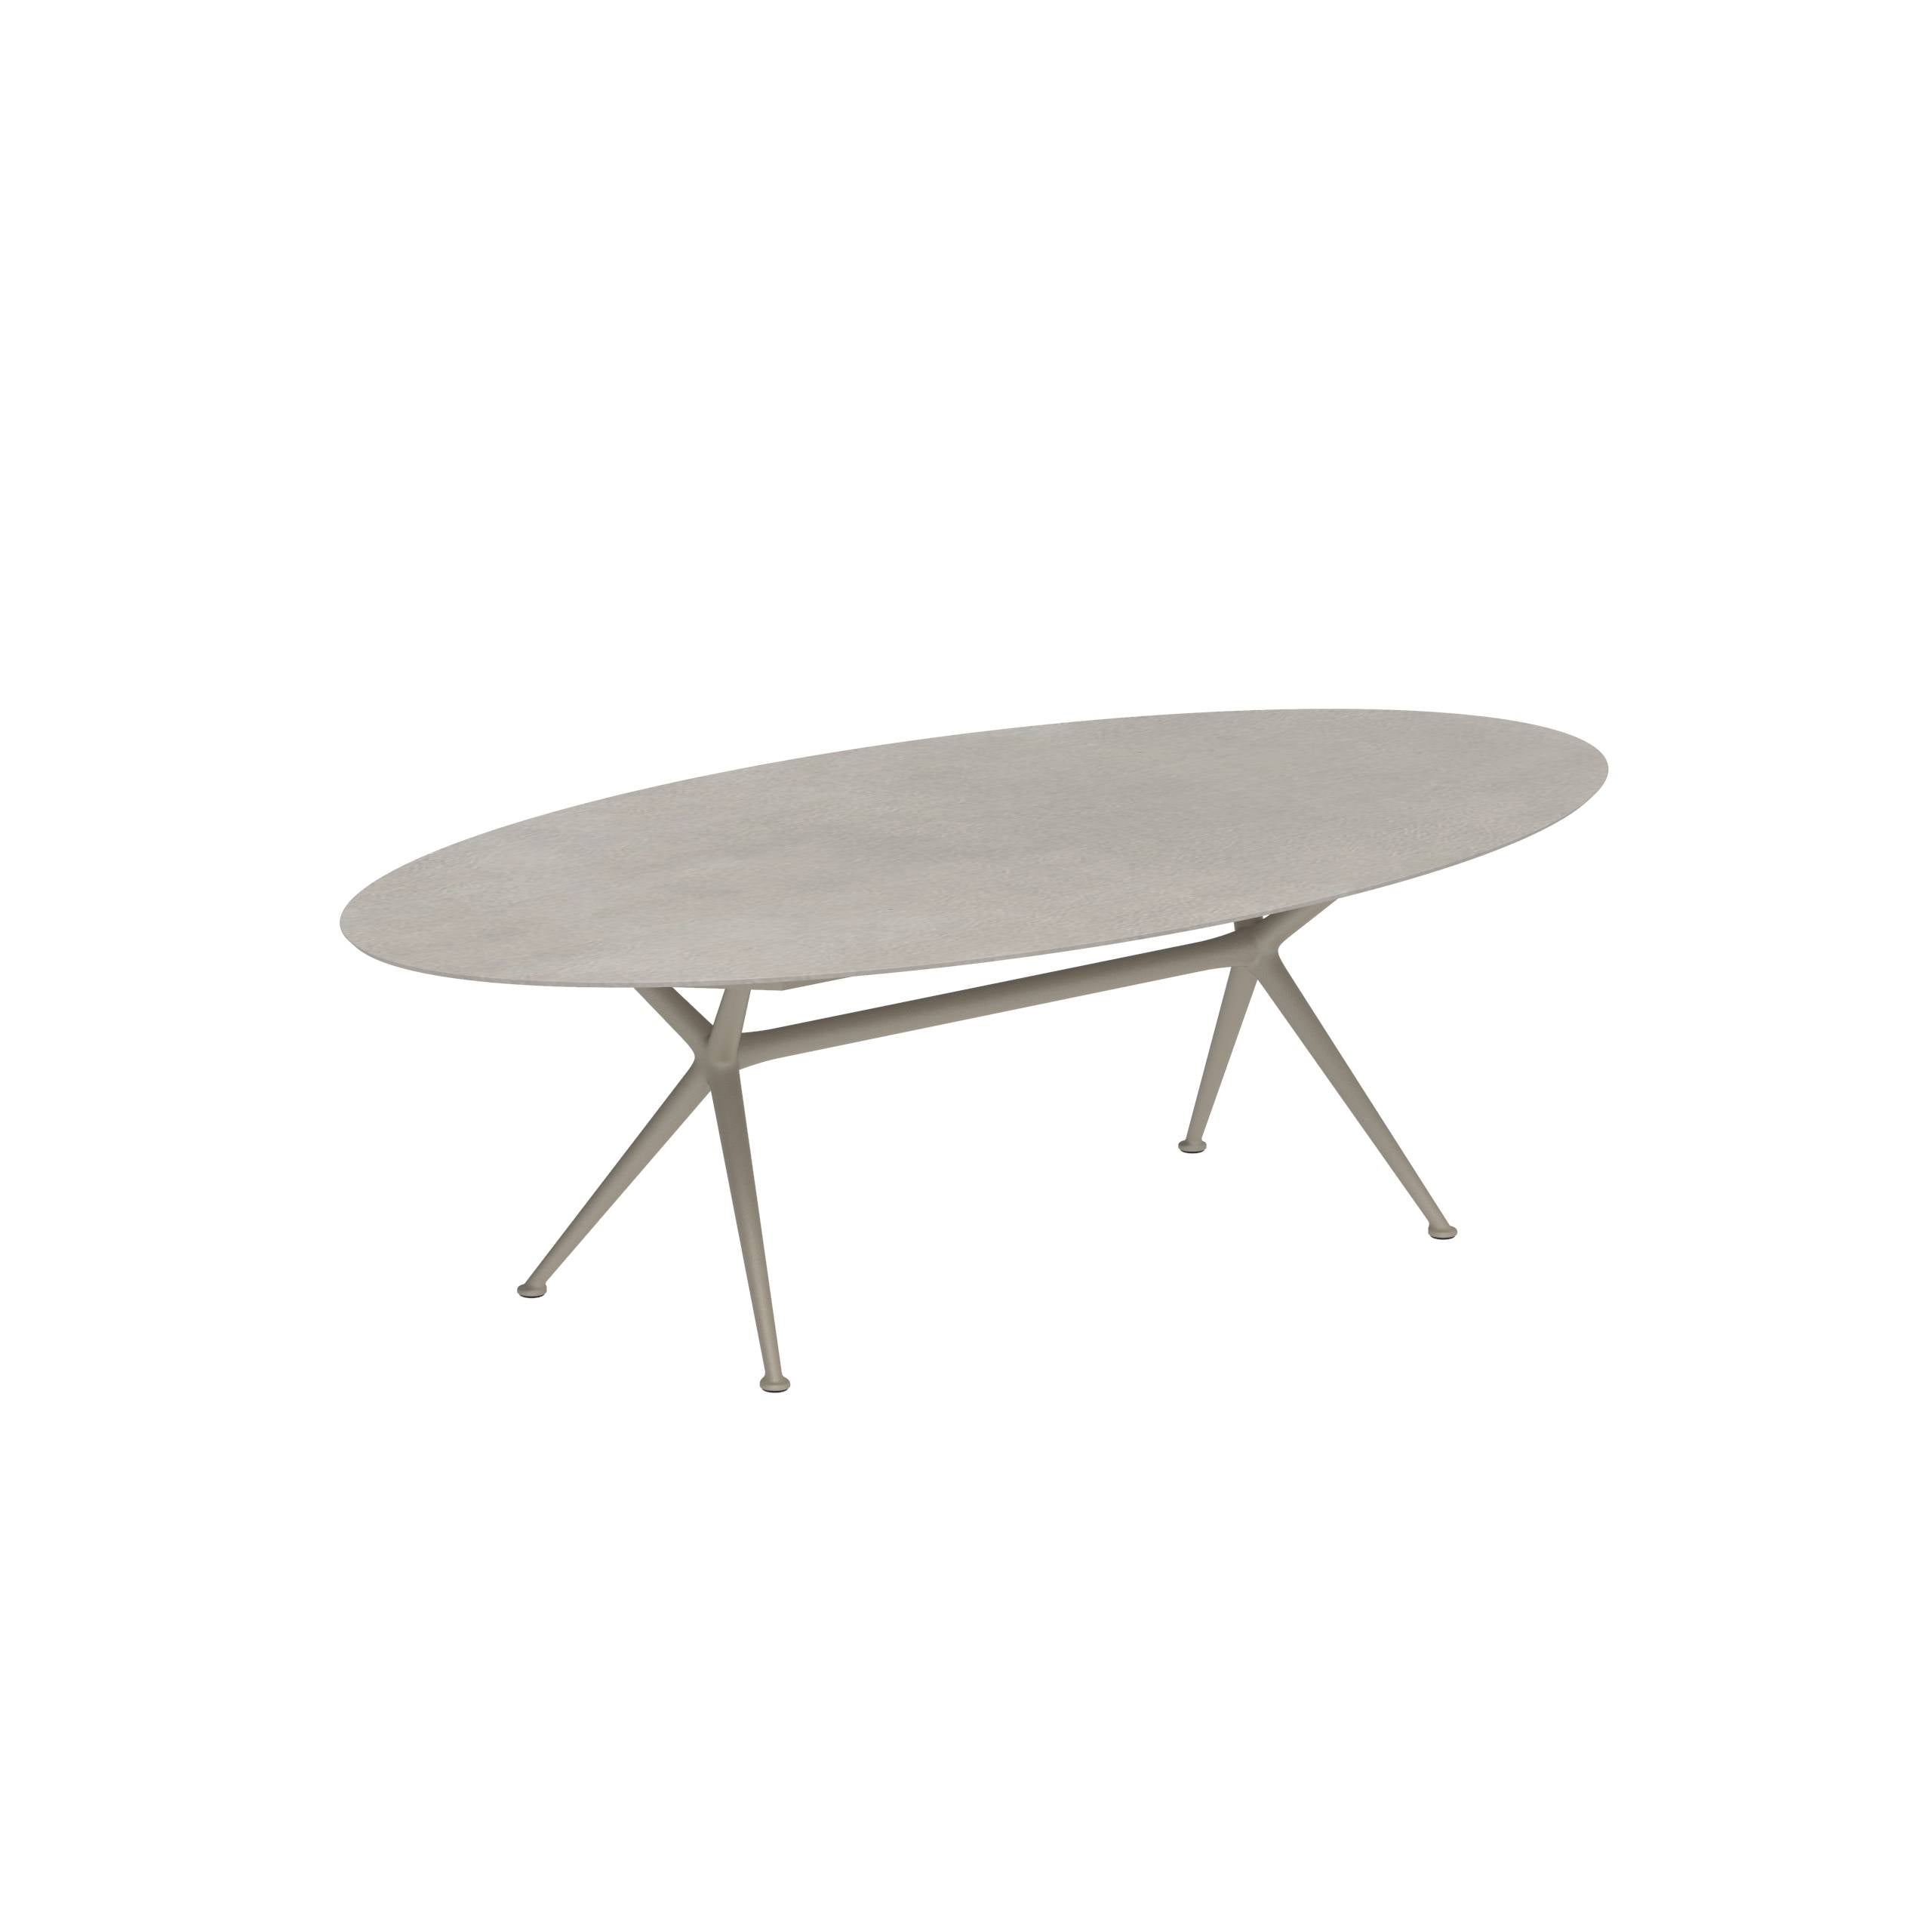 Exes Table Ellipse 250x130cm Alu Legs Sand - Table Top Ceramic Cemento Luminoso